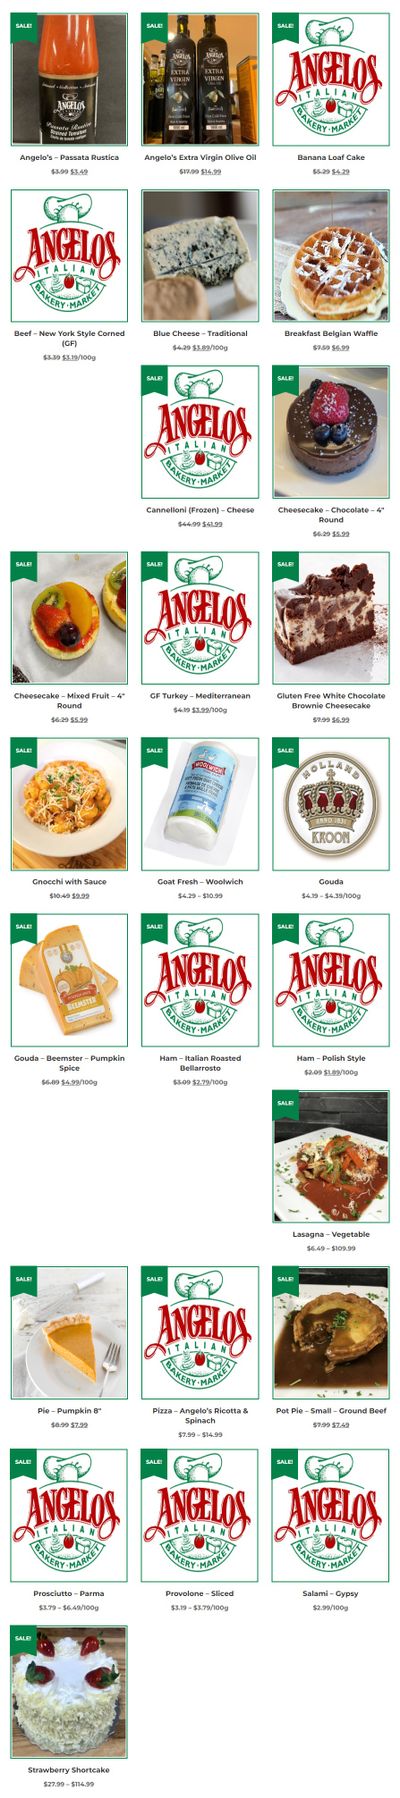 Angelo's Italian Bakery Monthly Specials November 1 to 30